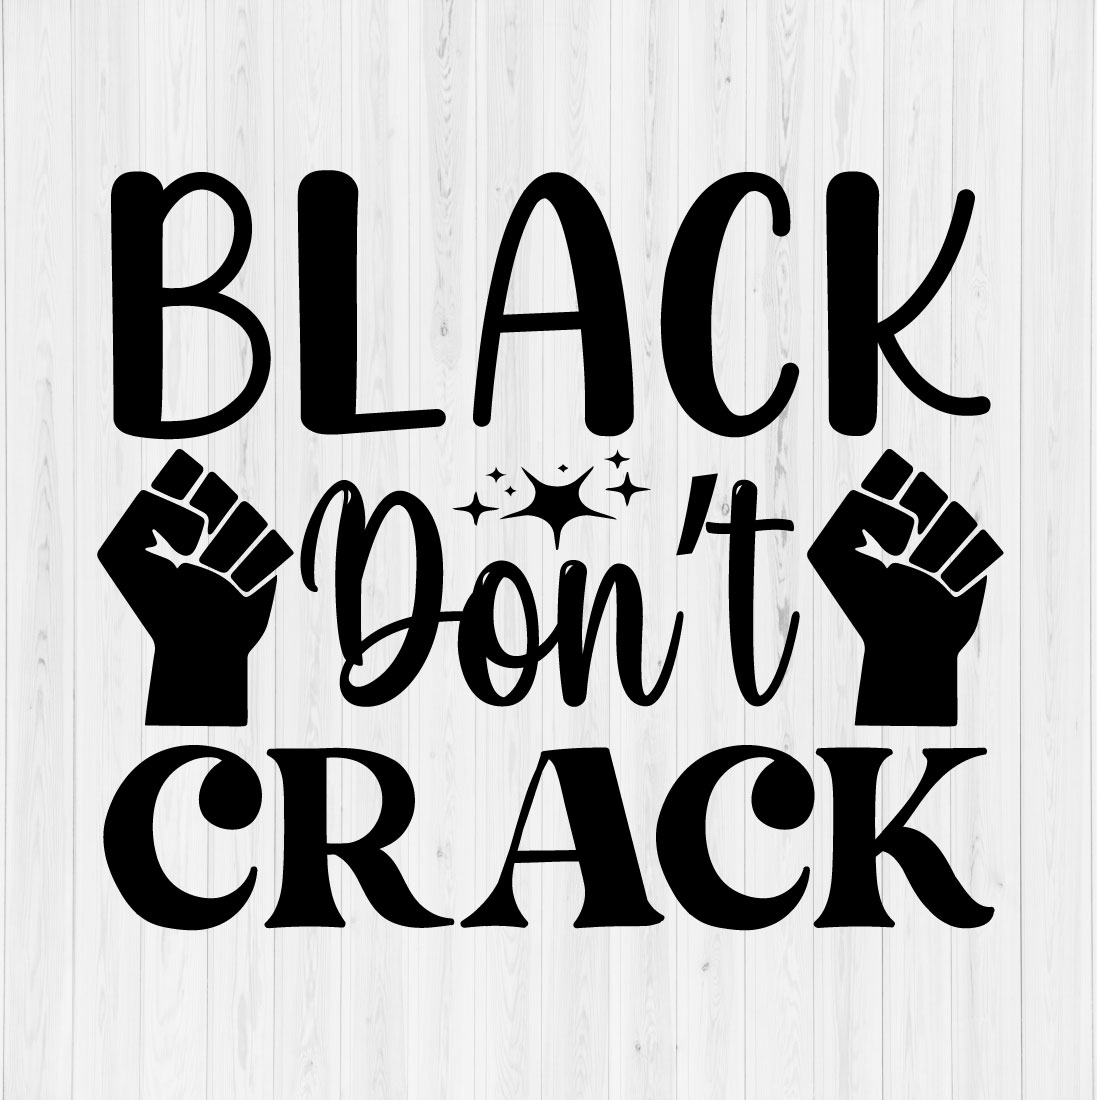 Black Don't Crack preview image.